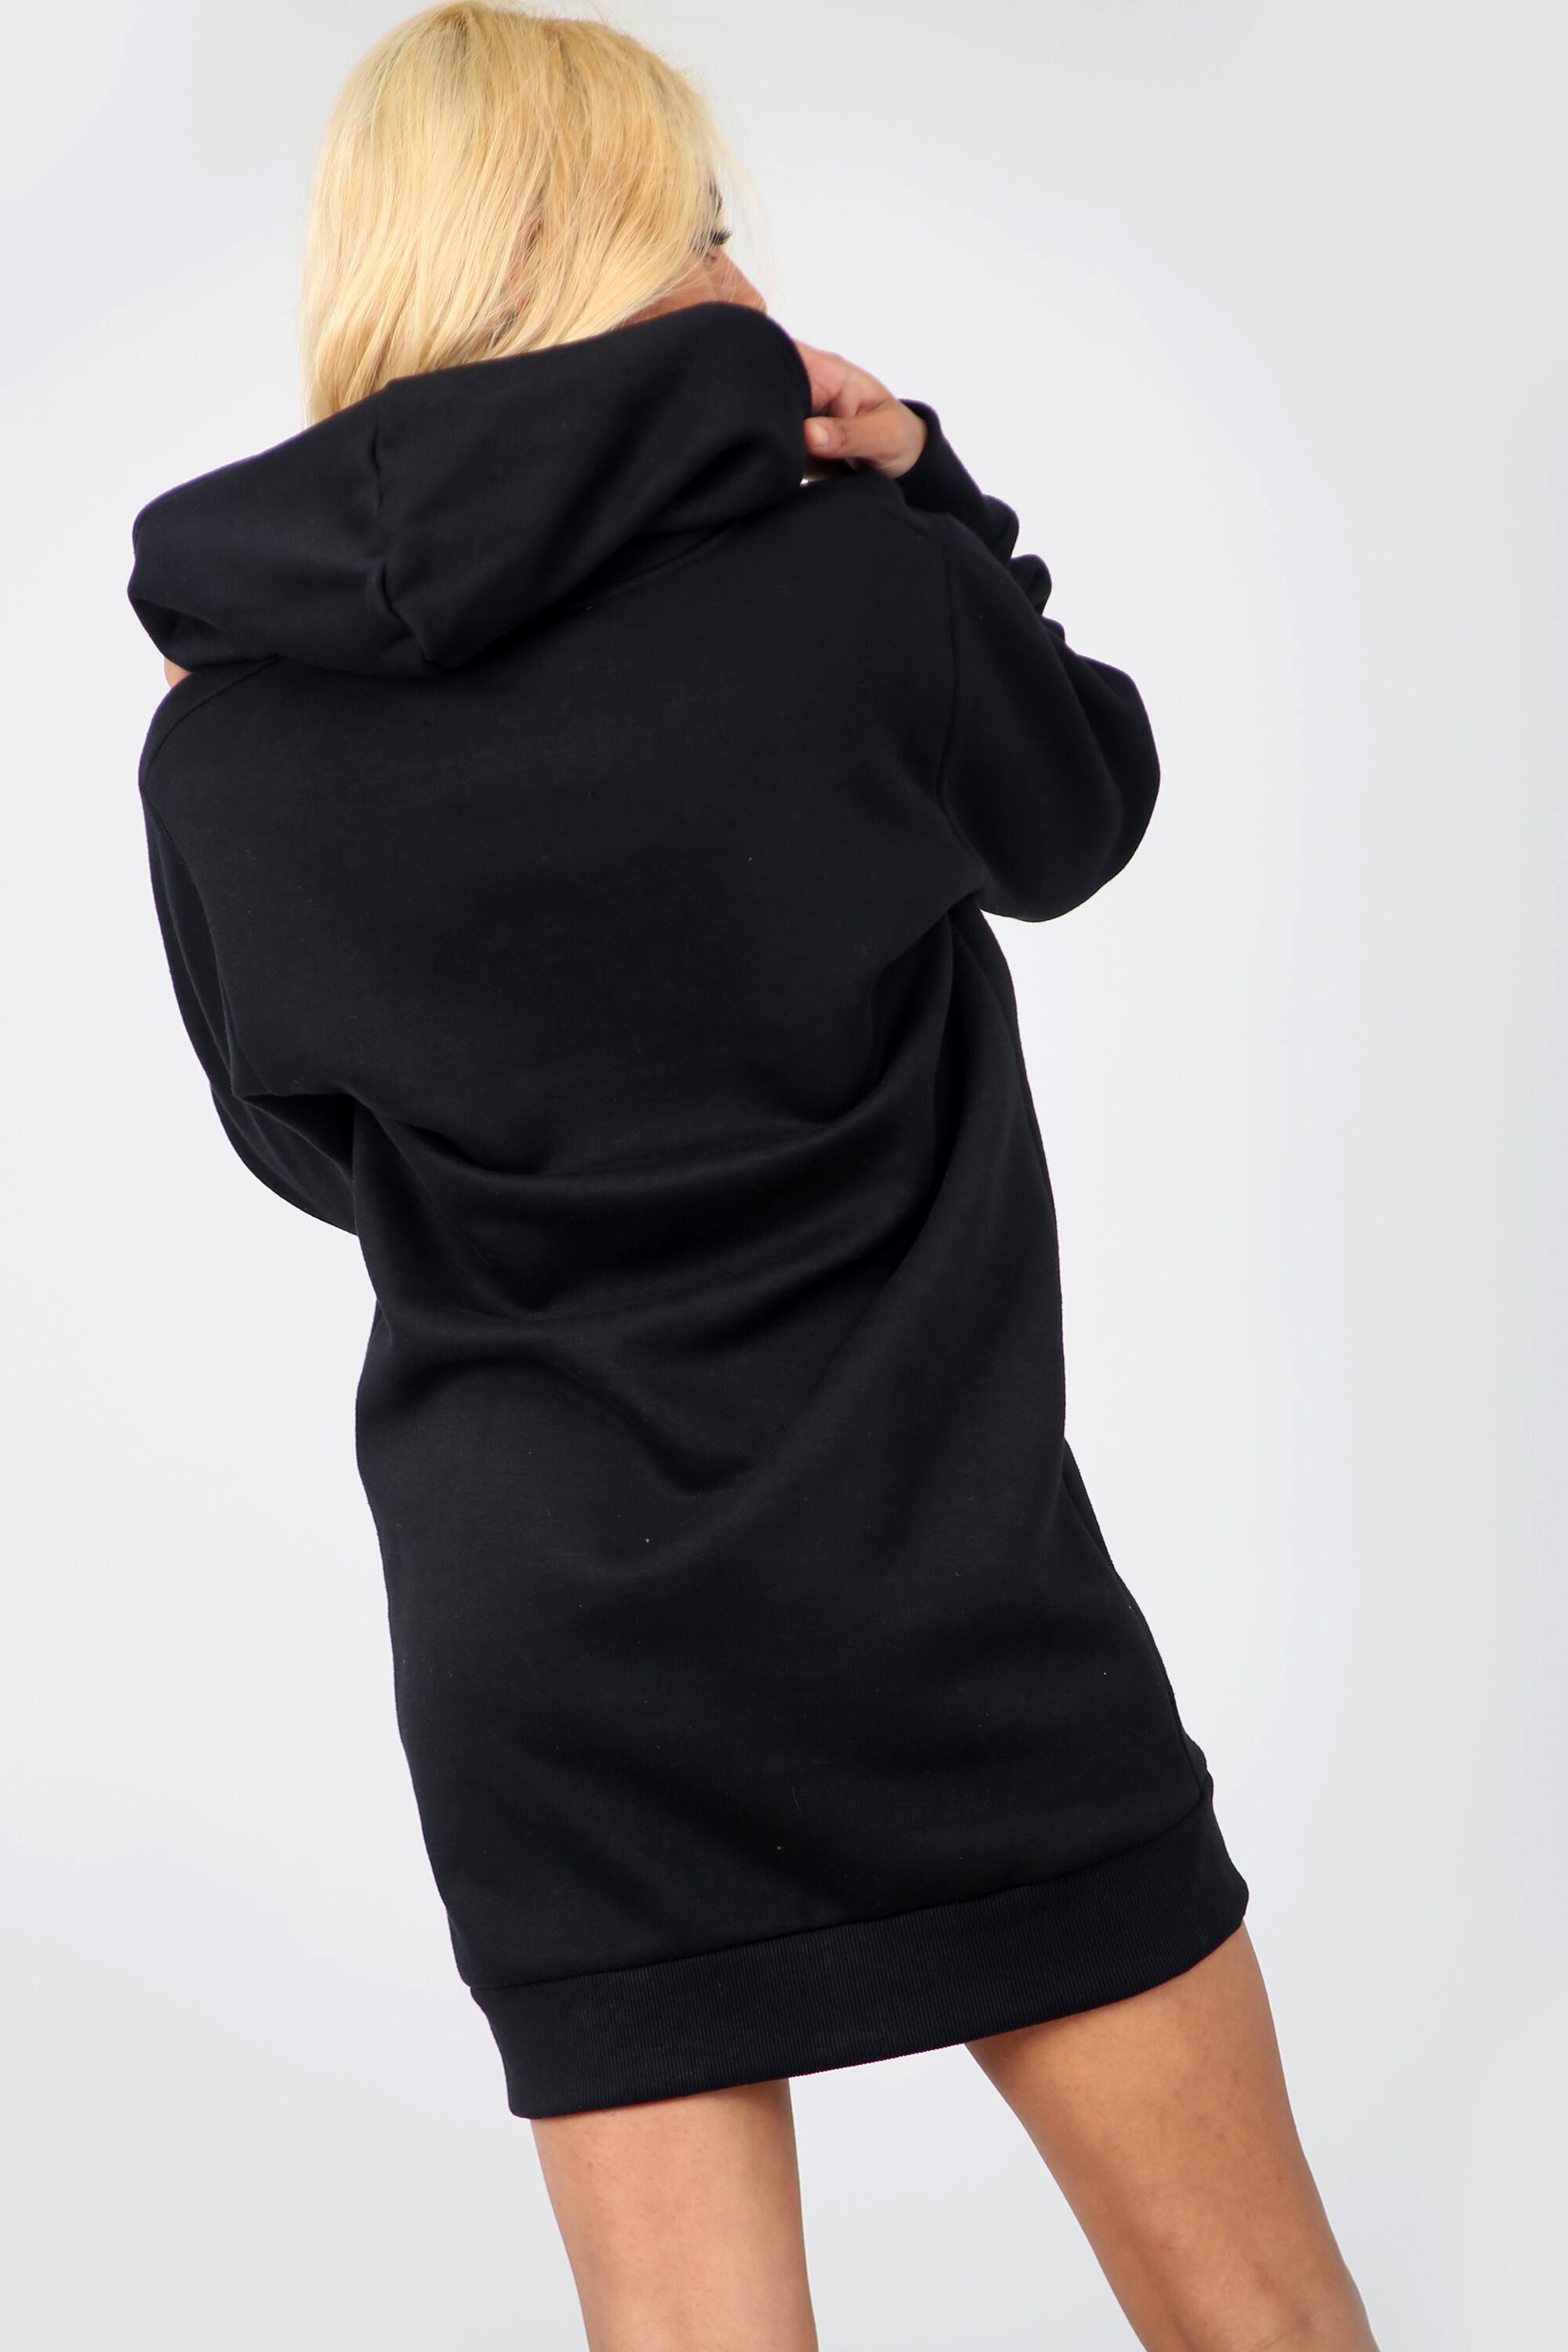 Long Sleeve Hooded Black Sweatshirt Jumper Dress - bejealous-com